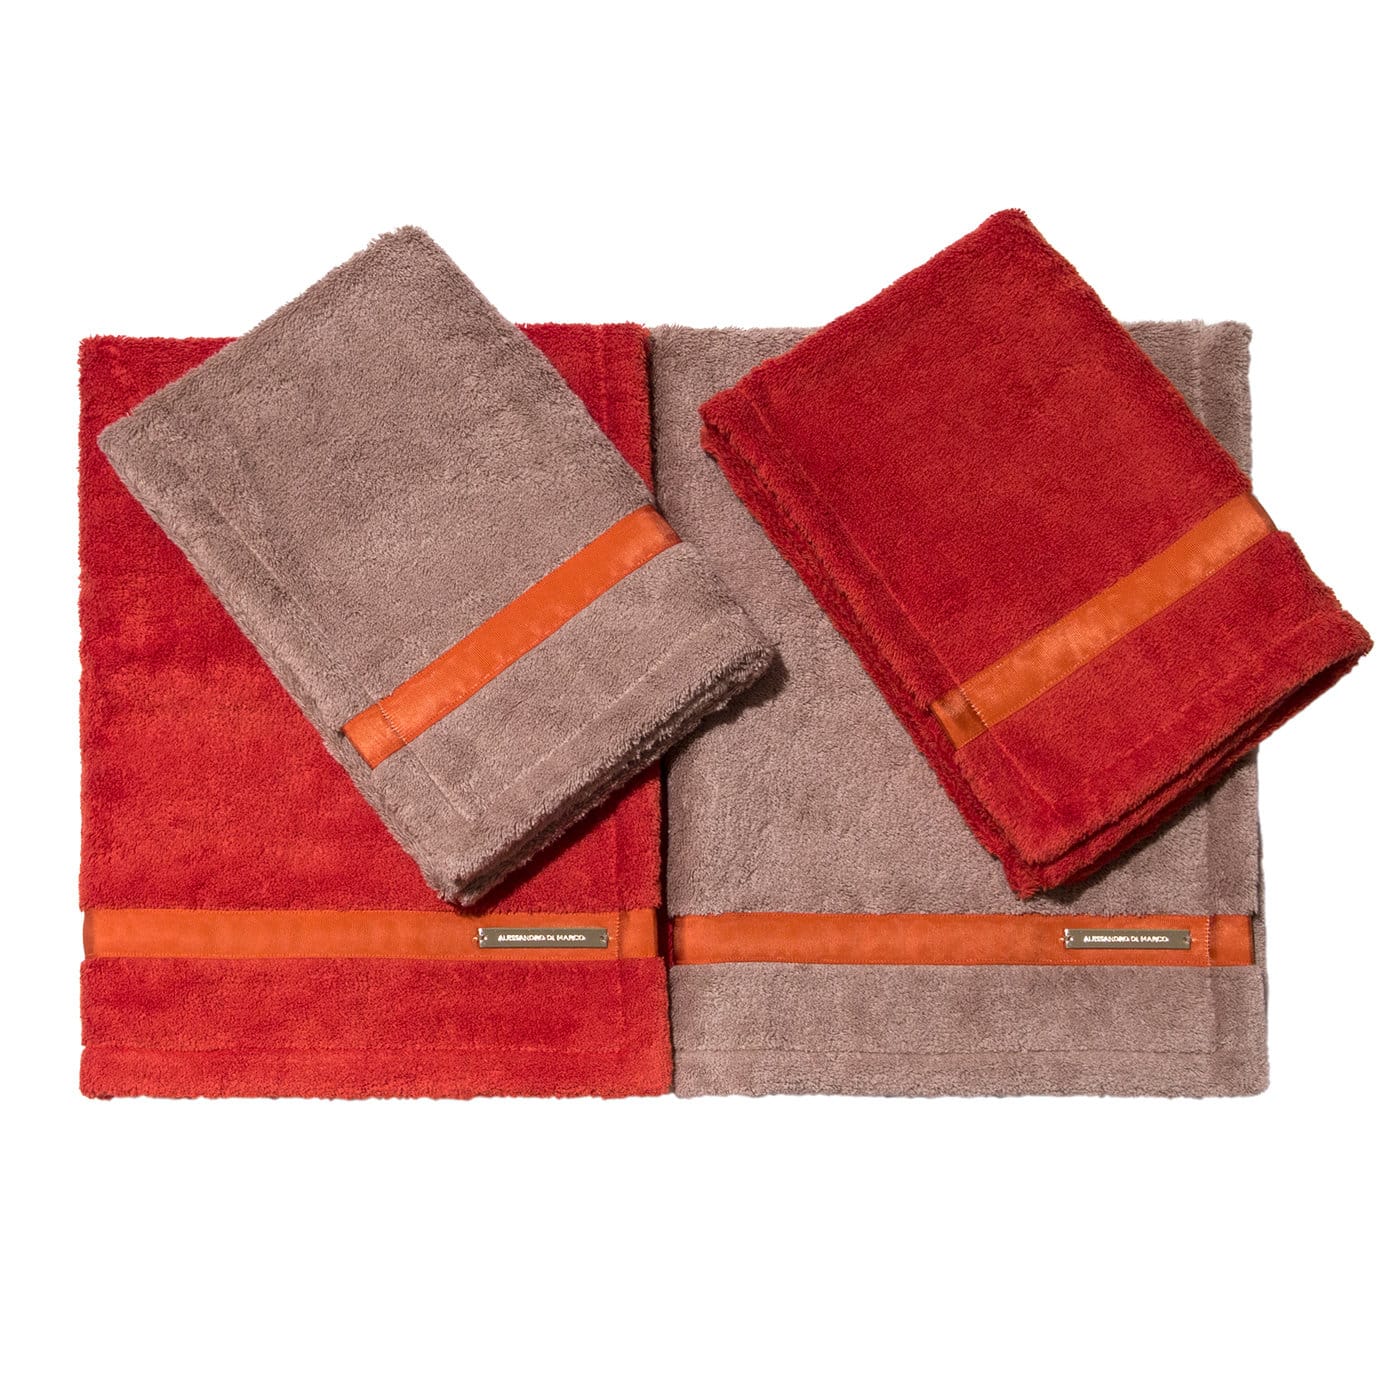 Large Bath Towel Set - Orange Beige - Alessandro Di Marco